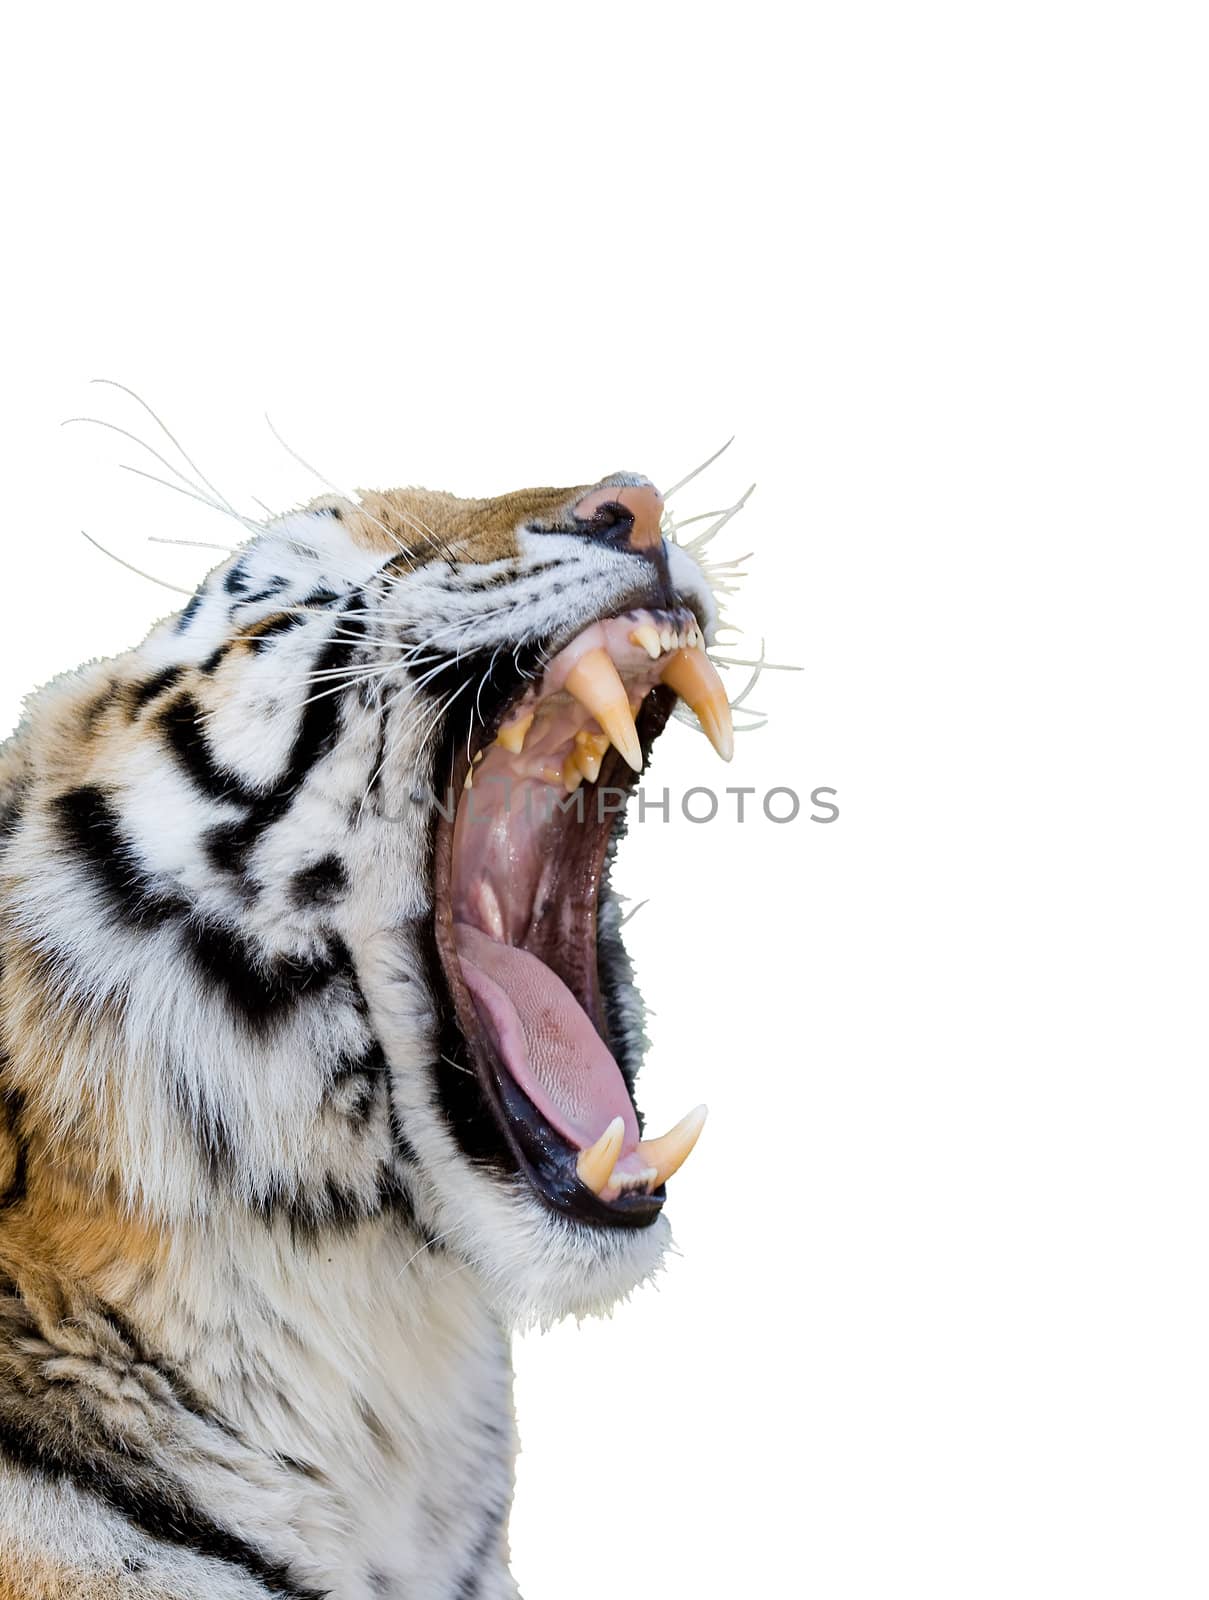 Tiger Growling by nightowlza